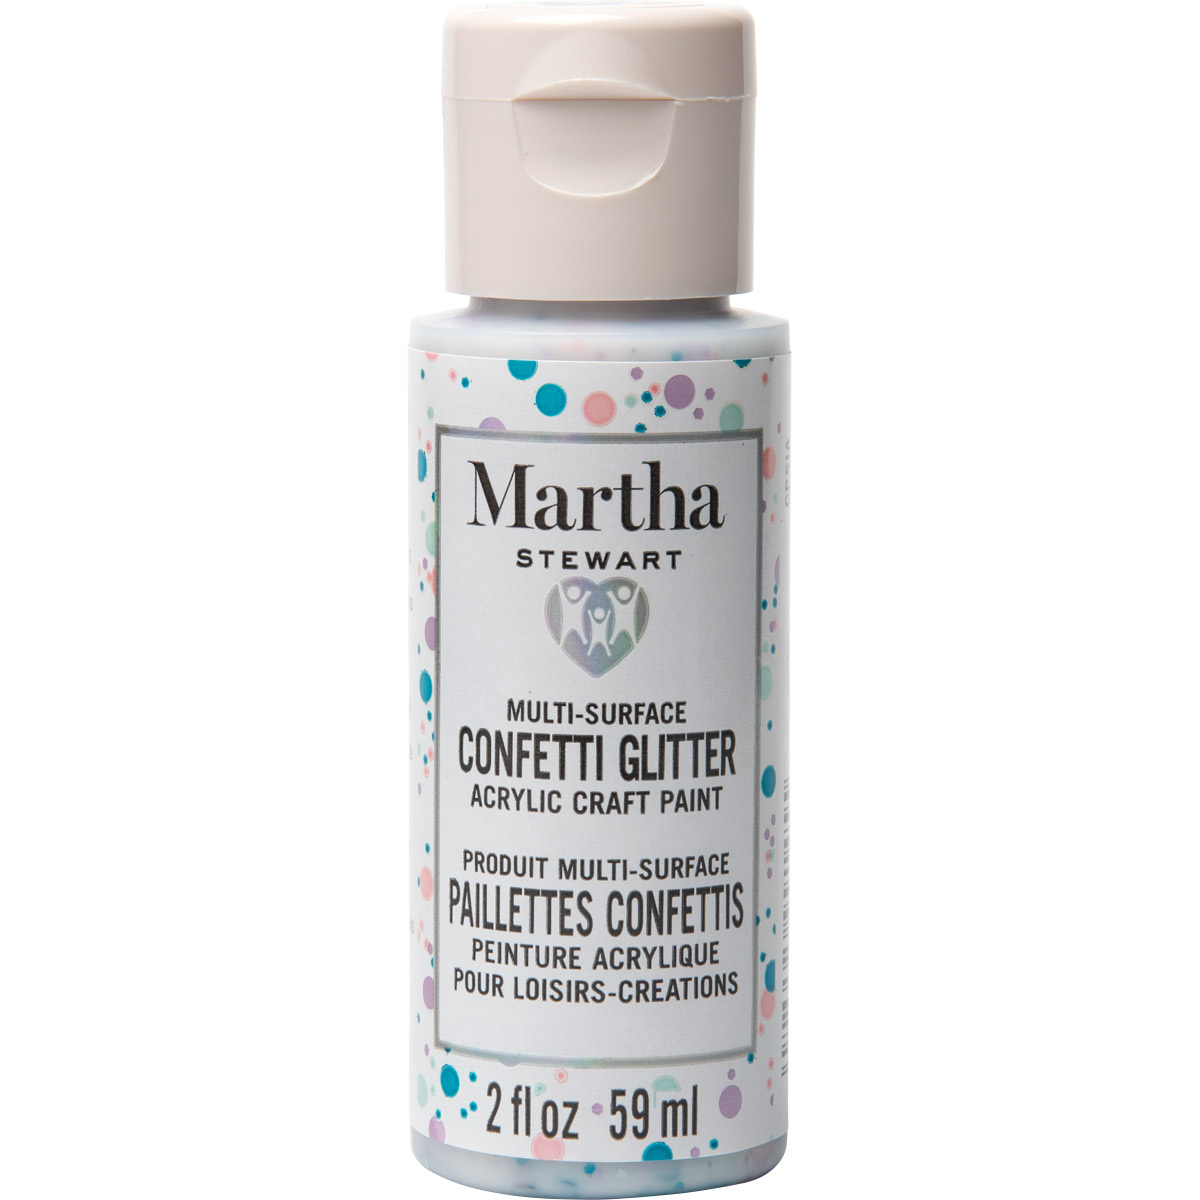 Martha Stewart ® Multi-Surface Confetti Glitter Acrylic Craft Paint CPSIA - Surprise Party, 2 oz. - 